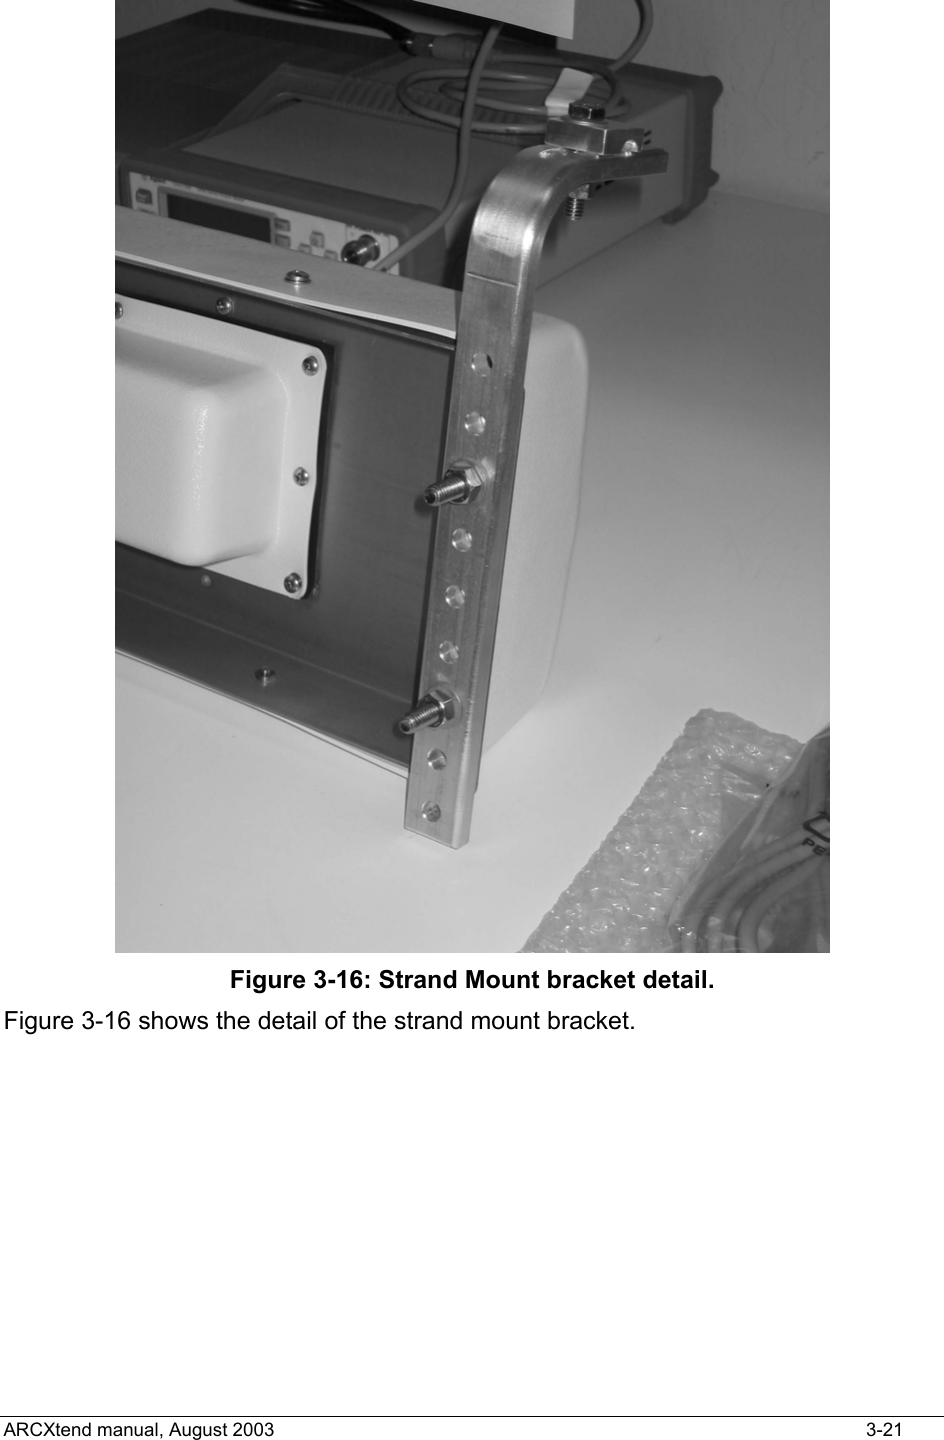   Figure 3-16: Strand Mount bracket detail. Figure 3-16 shows the detail of the strand mount bracket. ARCXtend manual, August 2003    3-21 